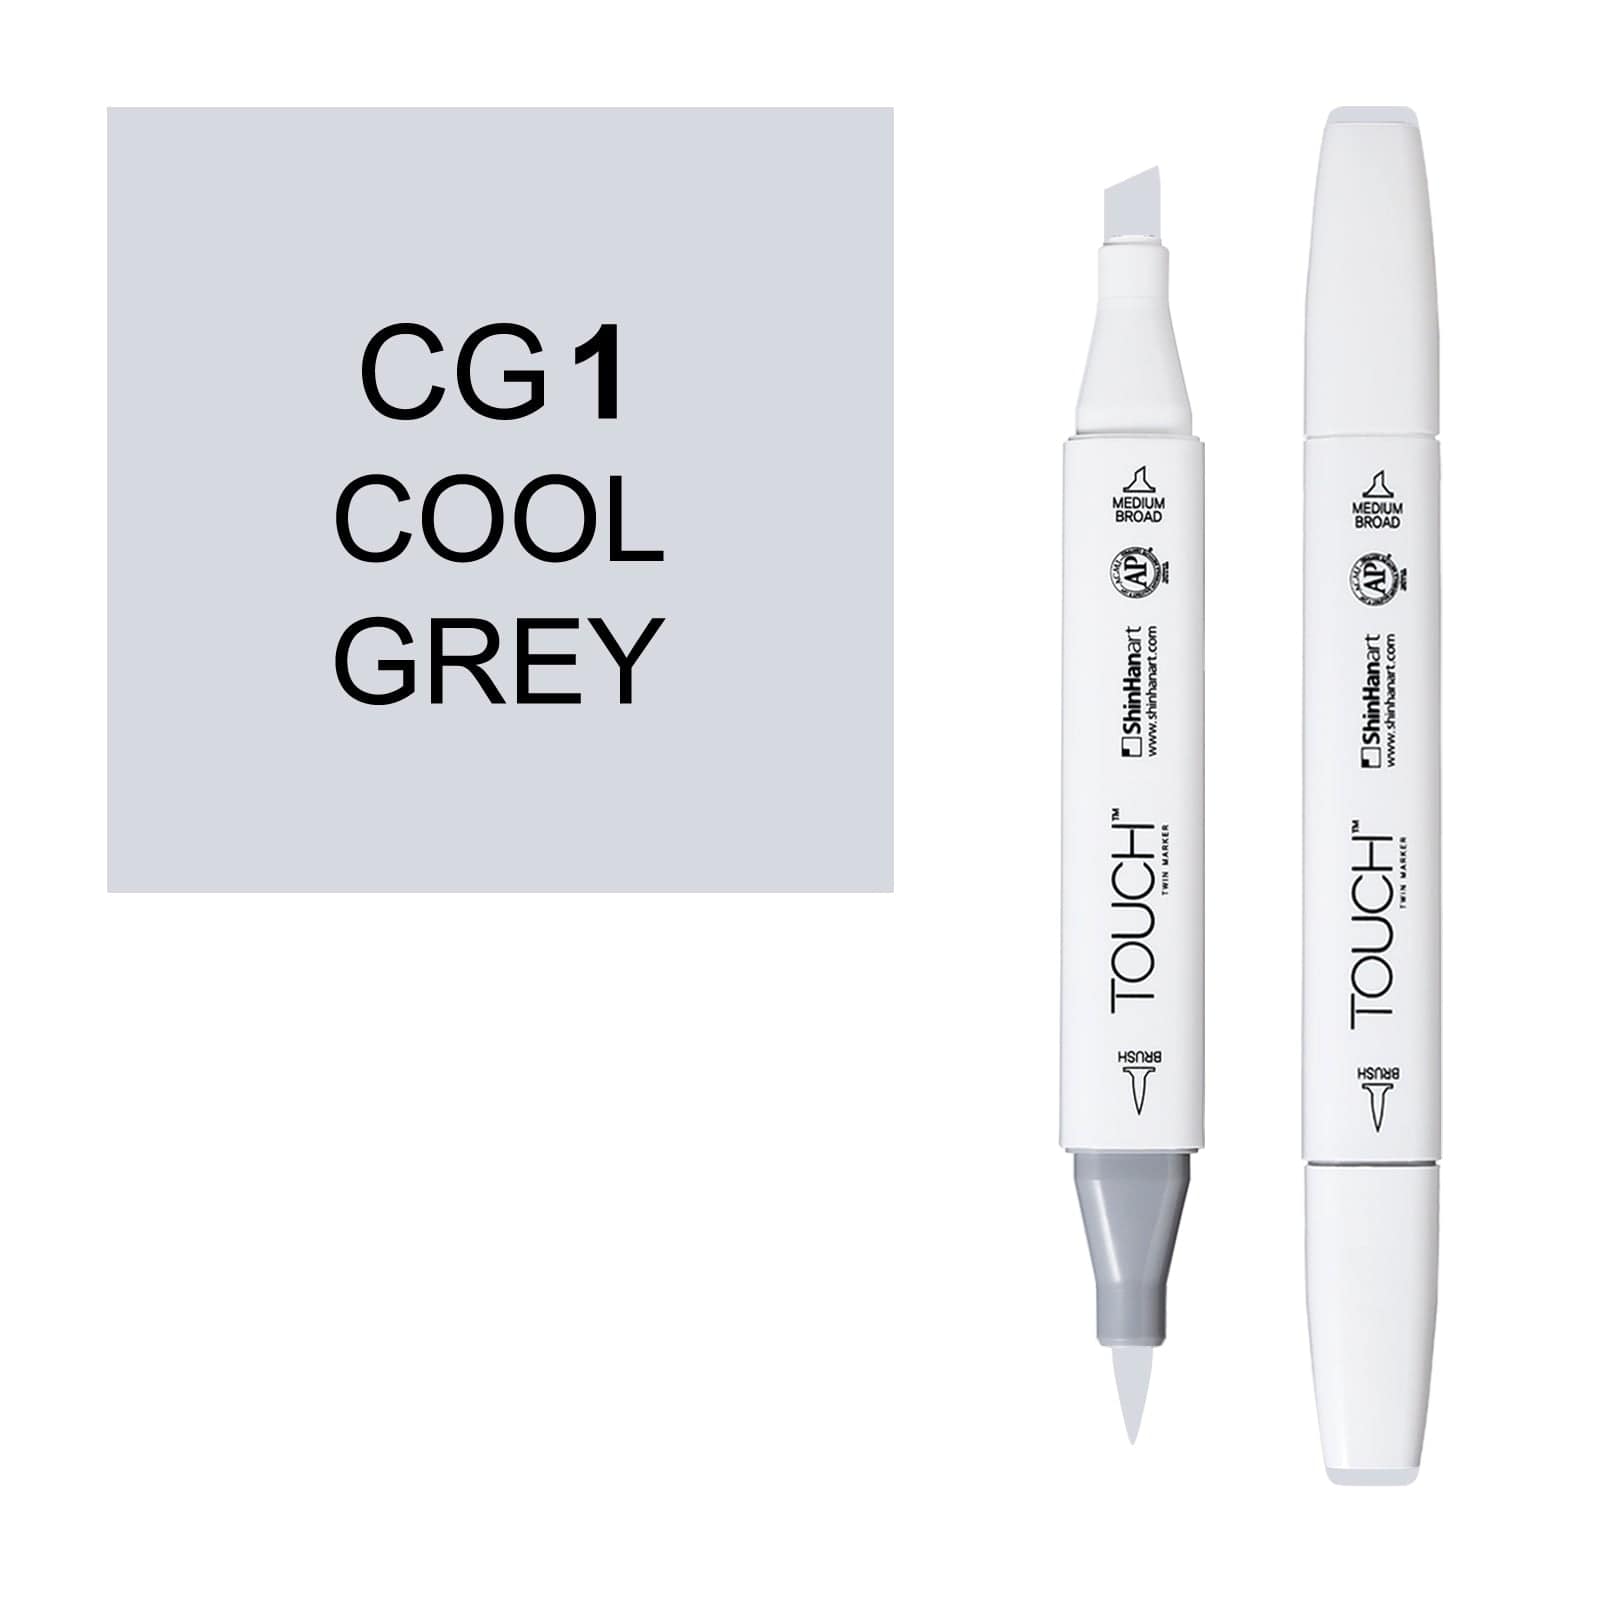 ShinHanart Touch Twin Brush Markers 1 Cool grey